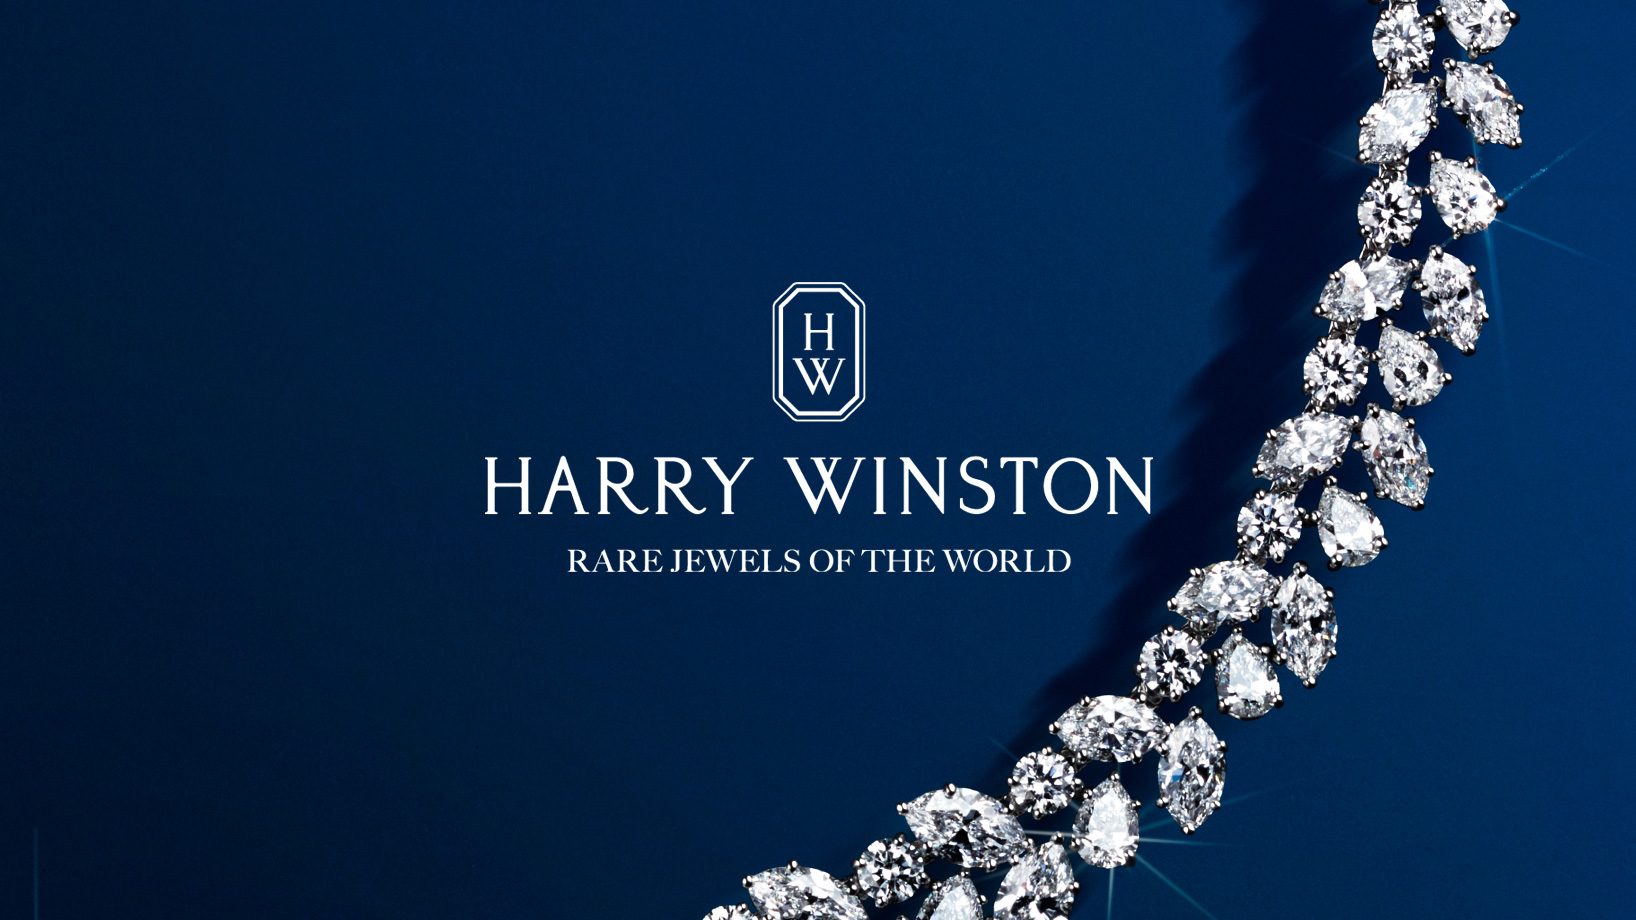 Harry Winston Brand Image and Identity, Logo